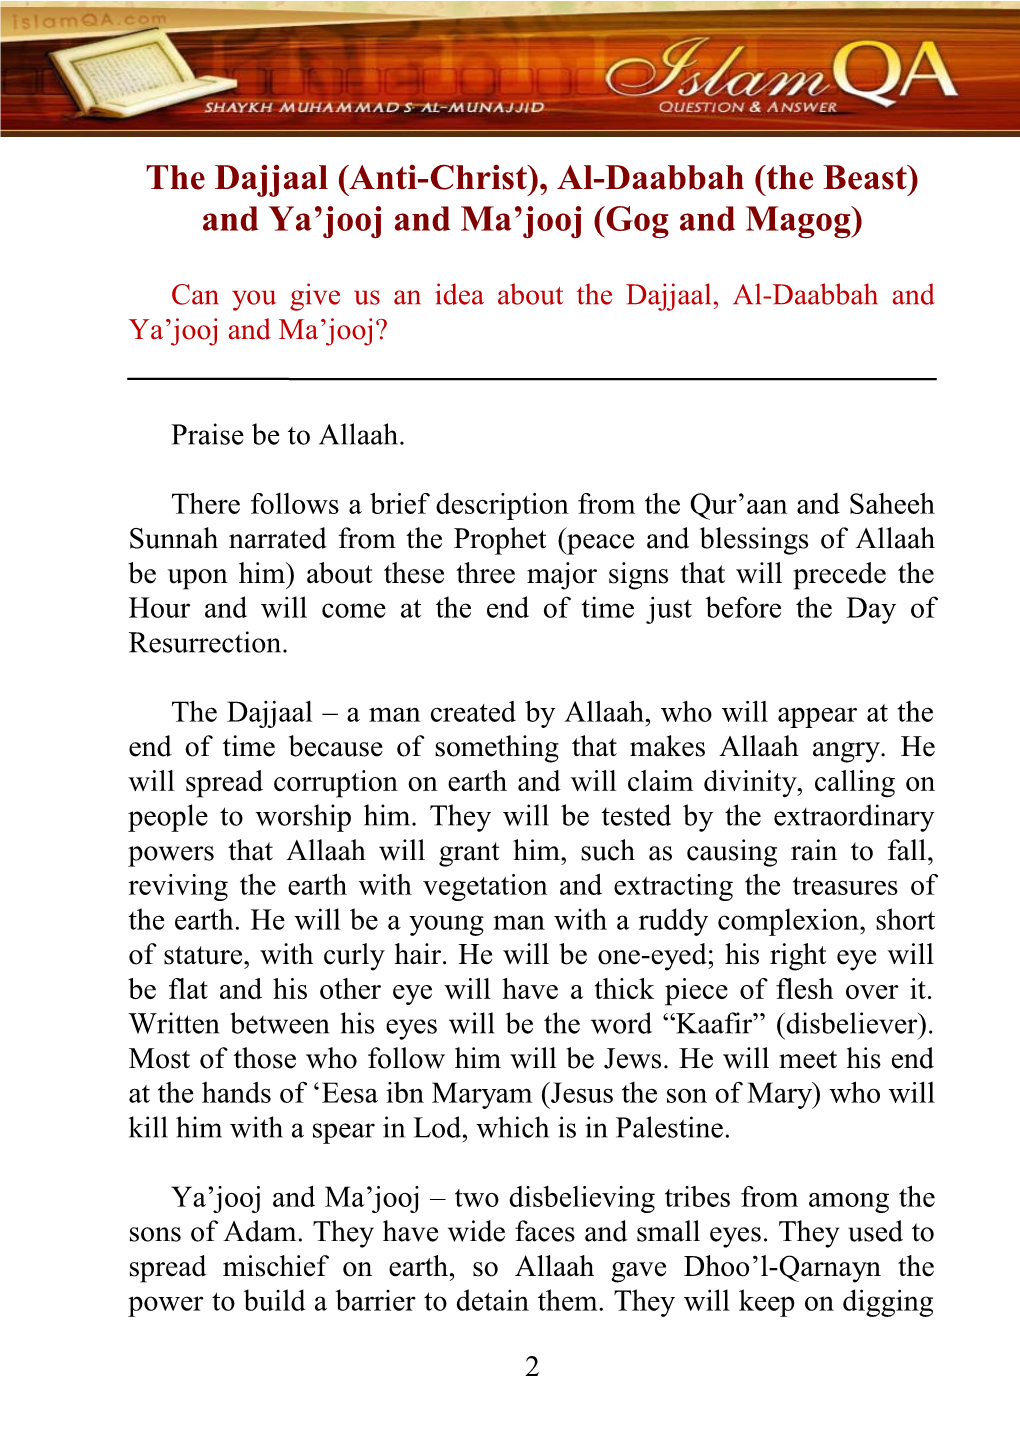 The Dajjaal (Anti-Christ), Al-Daabbah (The Beast) and Ya Jooj and Ma Jooj (Gog and Magog)